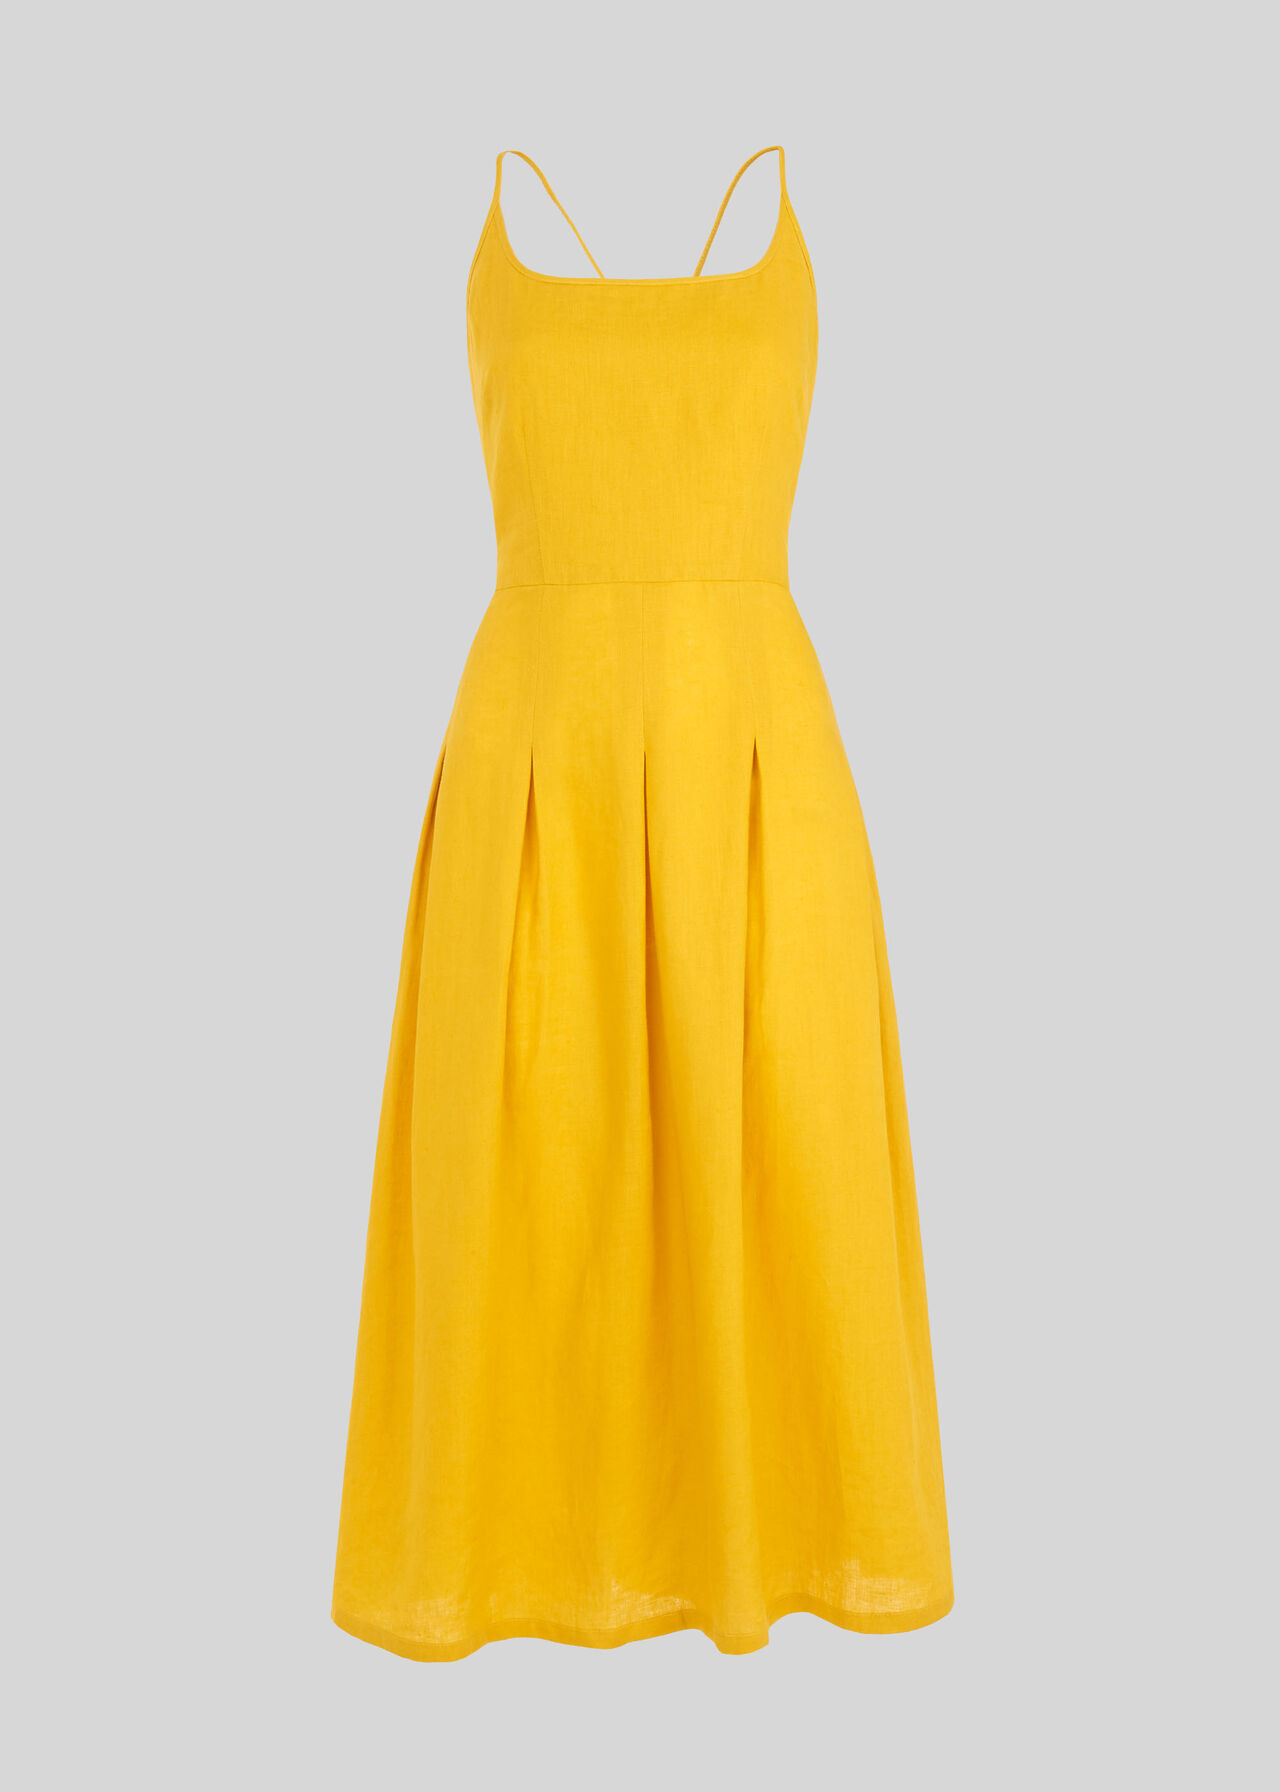 Duffy Linen Strappy Dress Yellow